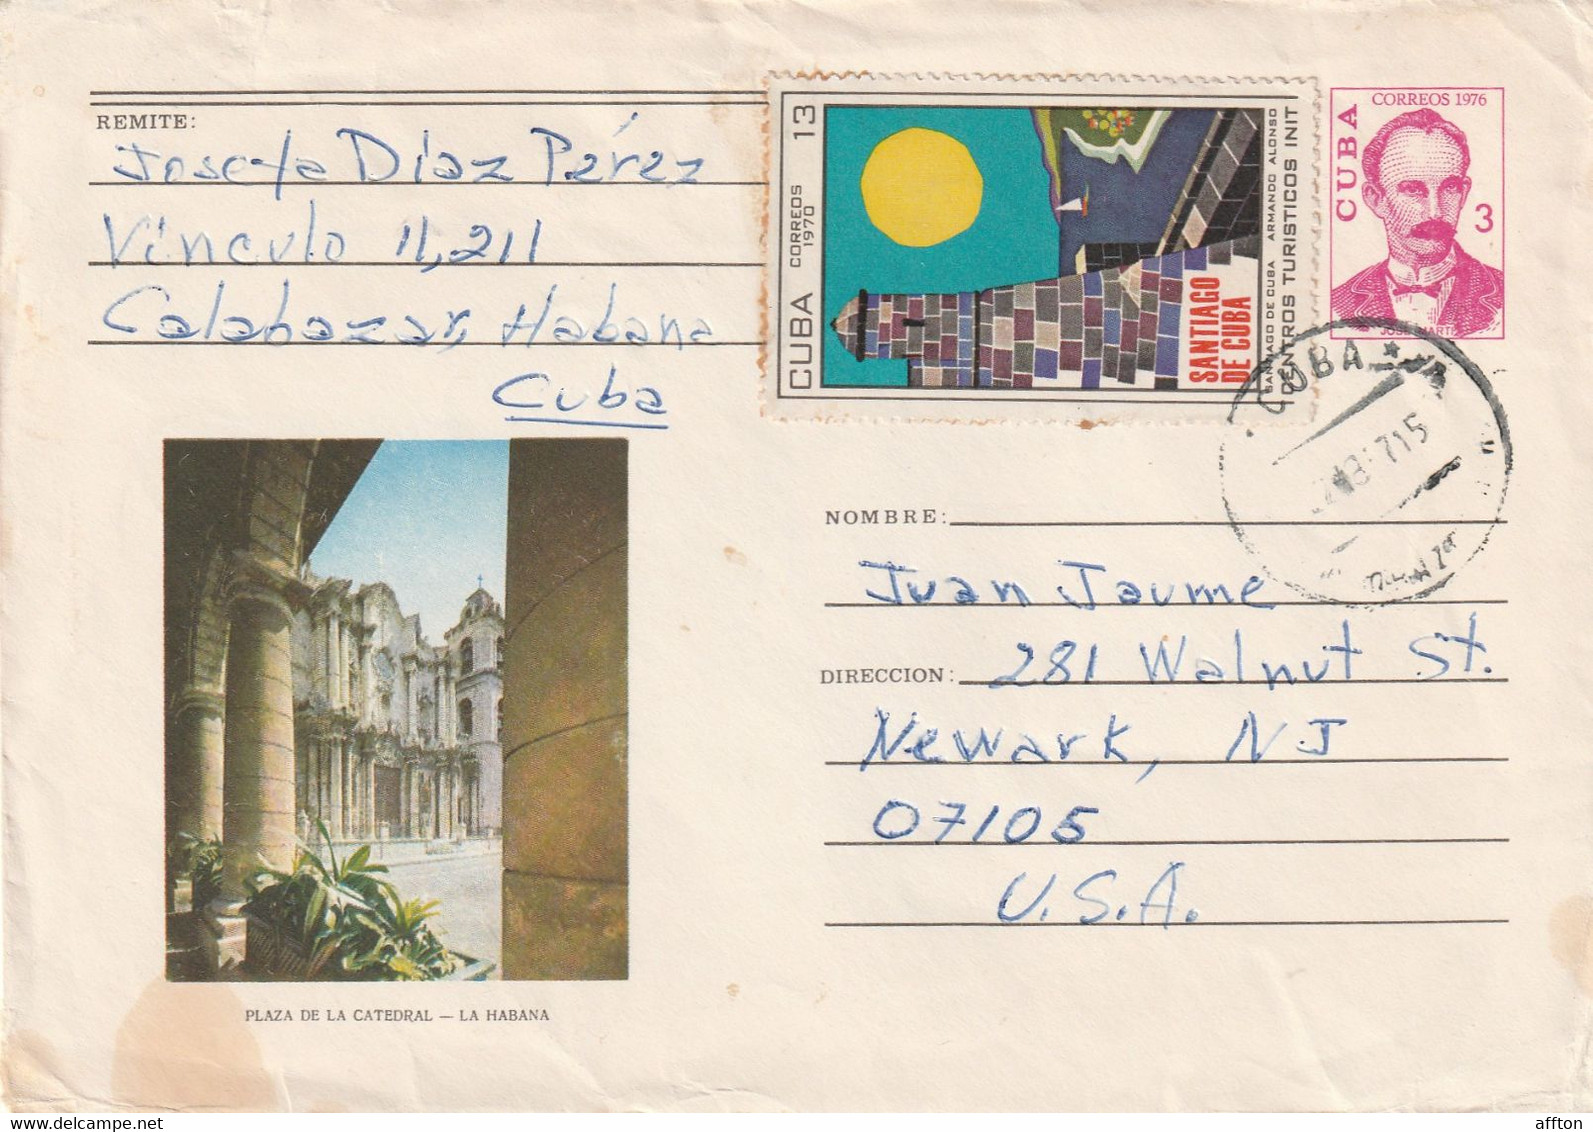 Havana Cuba 1971 Cover Mailed - Storia Postale